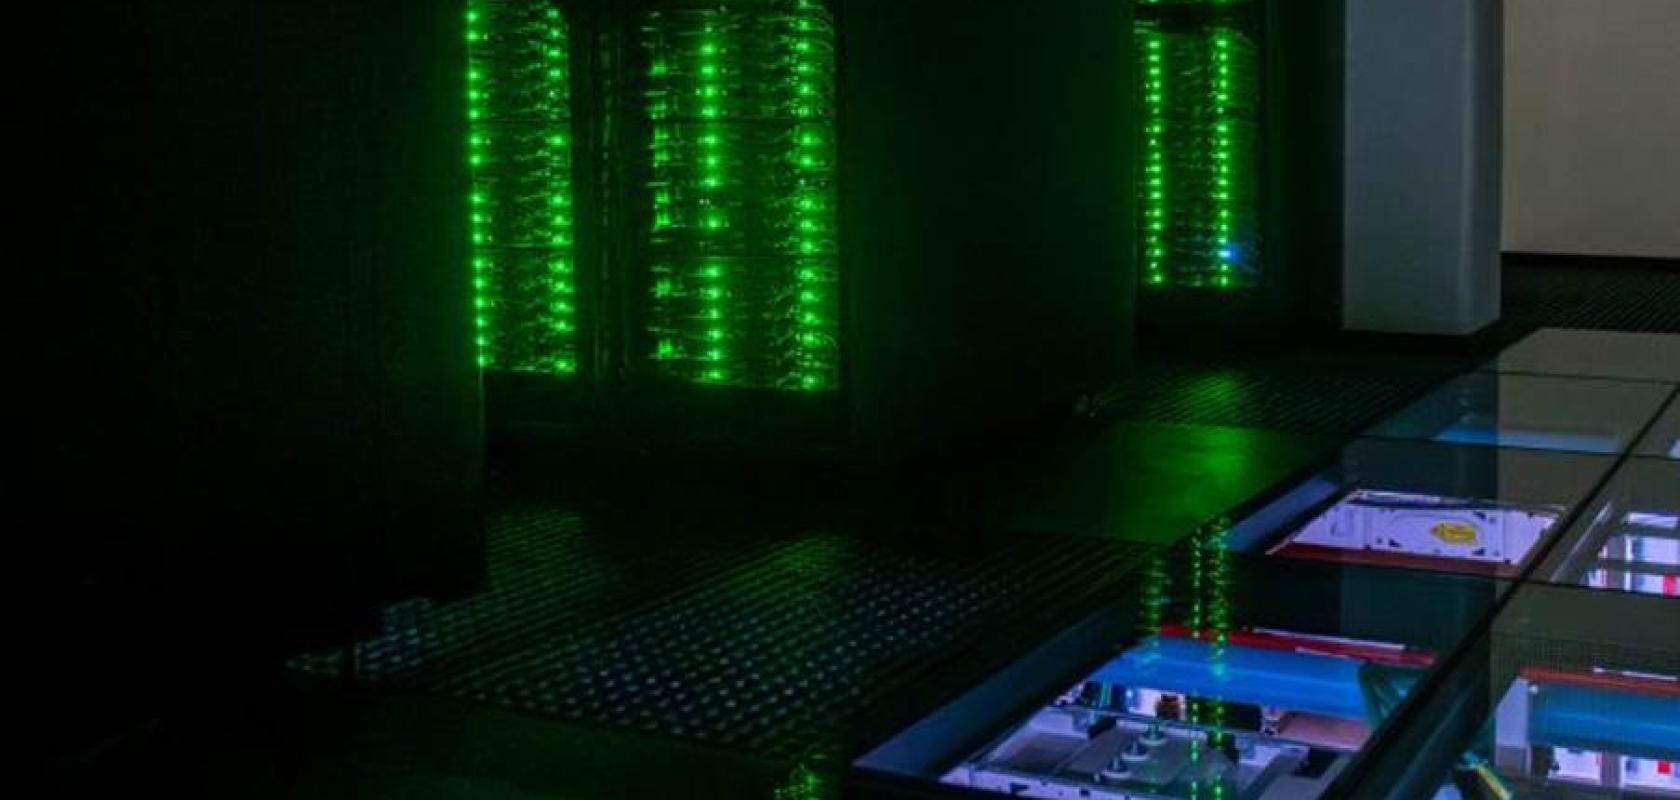 The marenostrum supercomputer